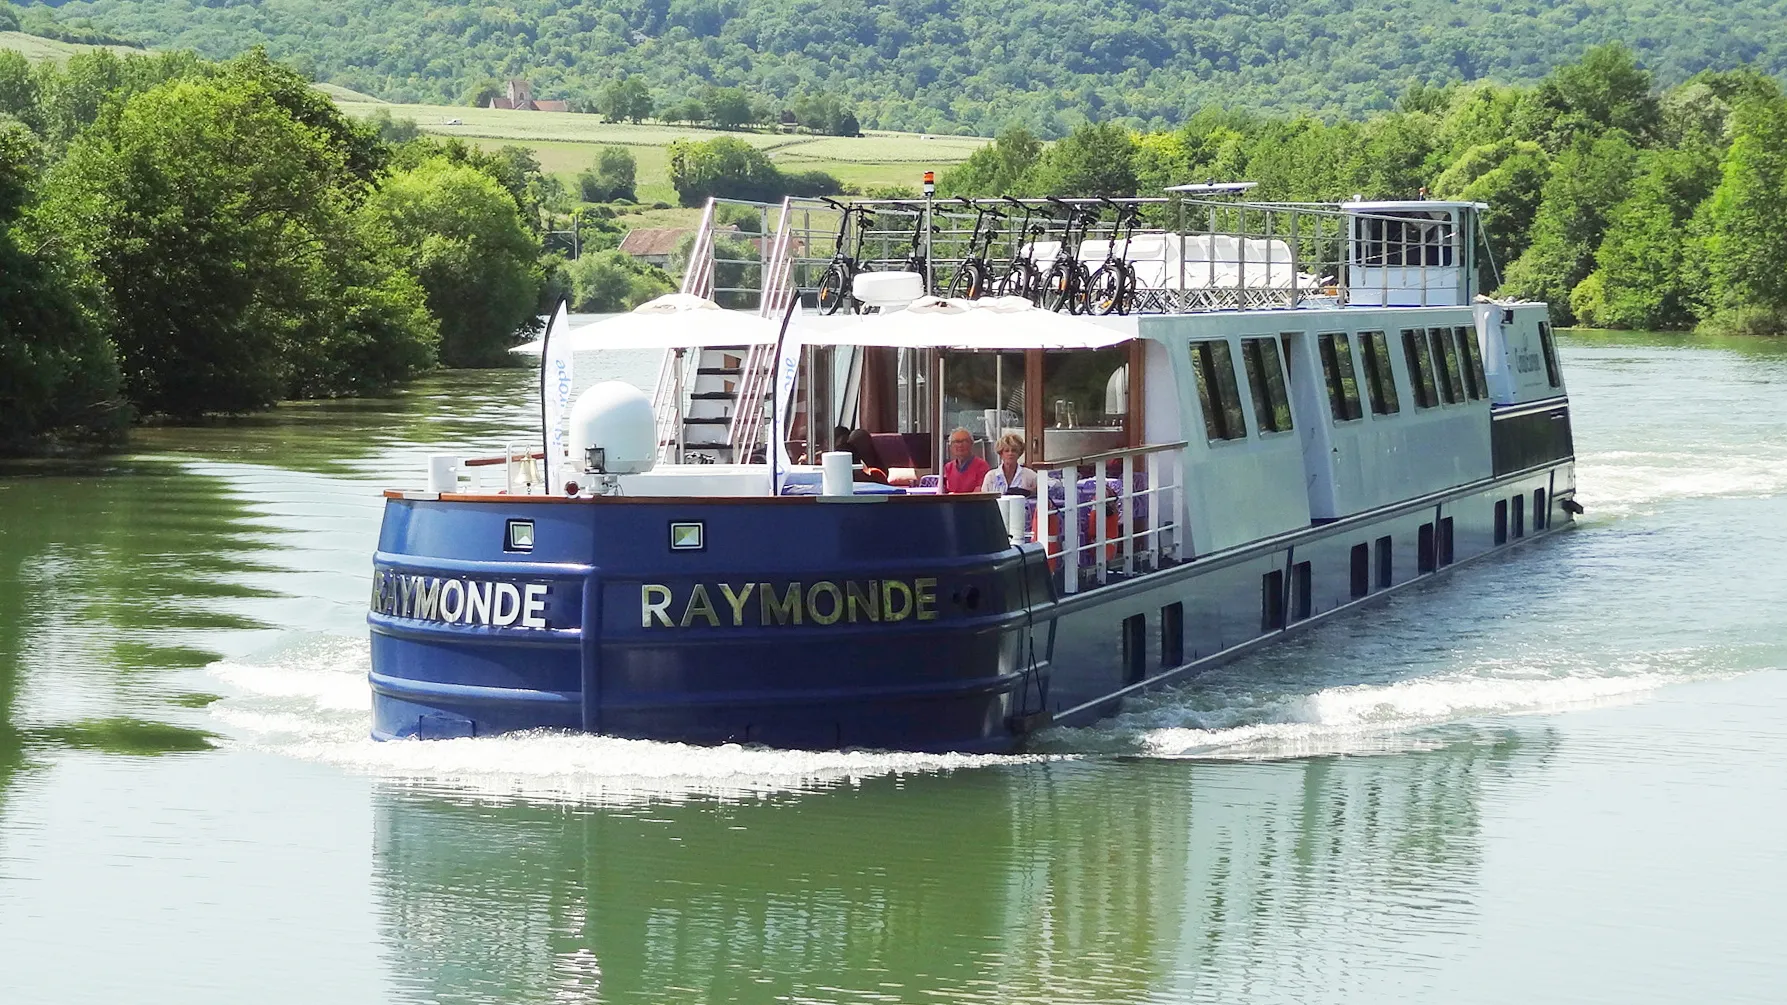 Raymonde vessel front view